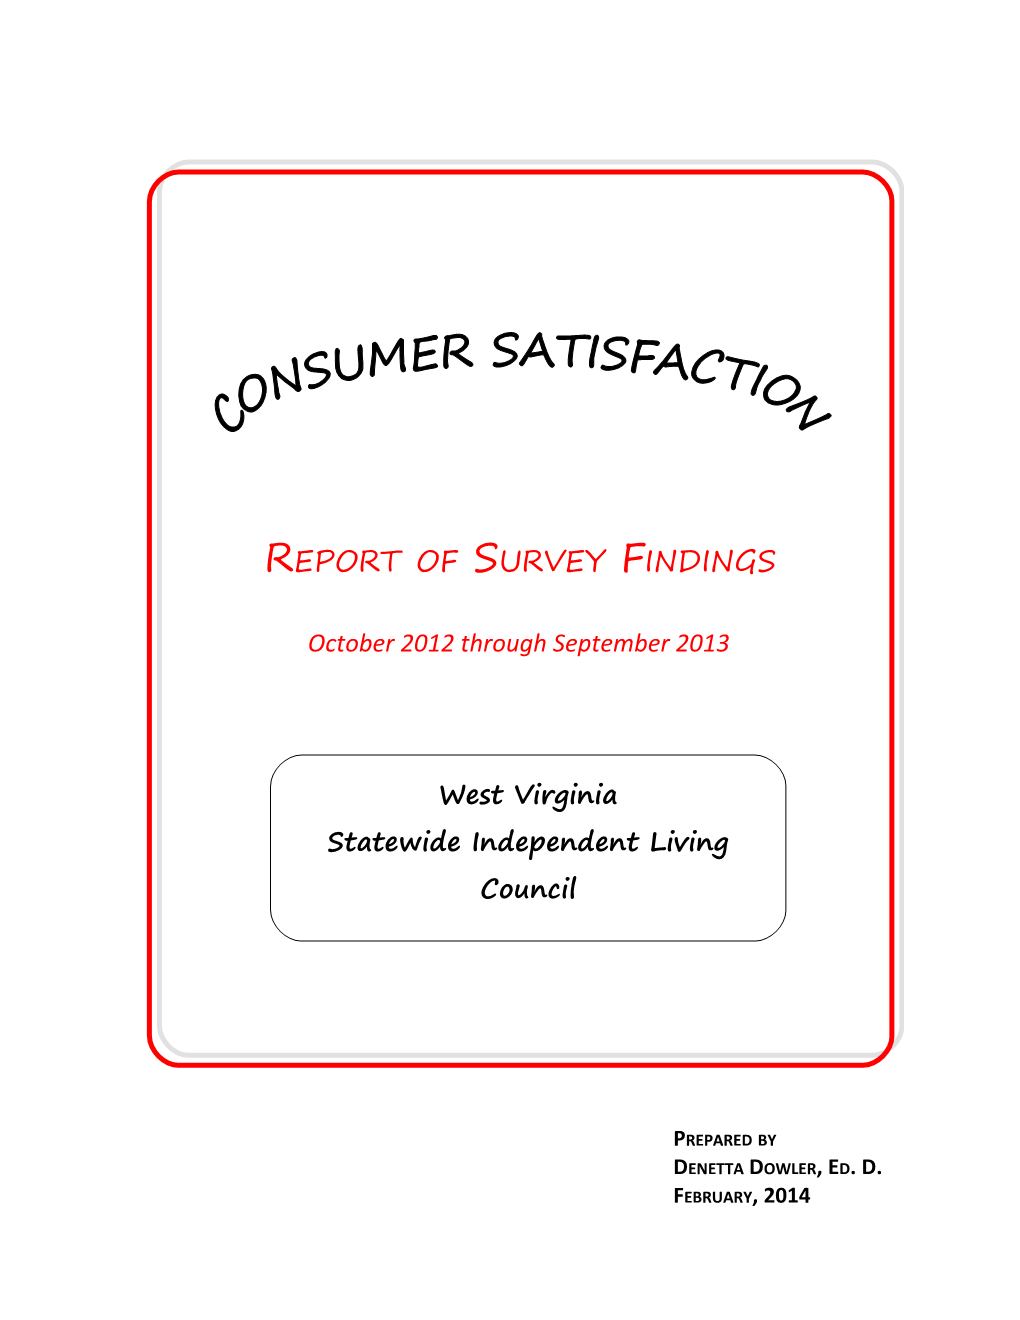 Consumer Satifaction Survey 2002-03